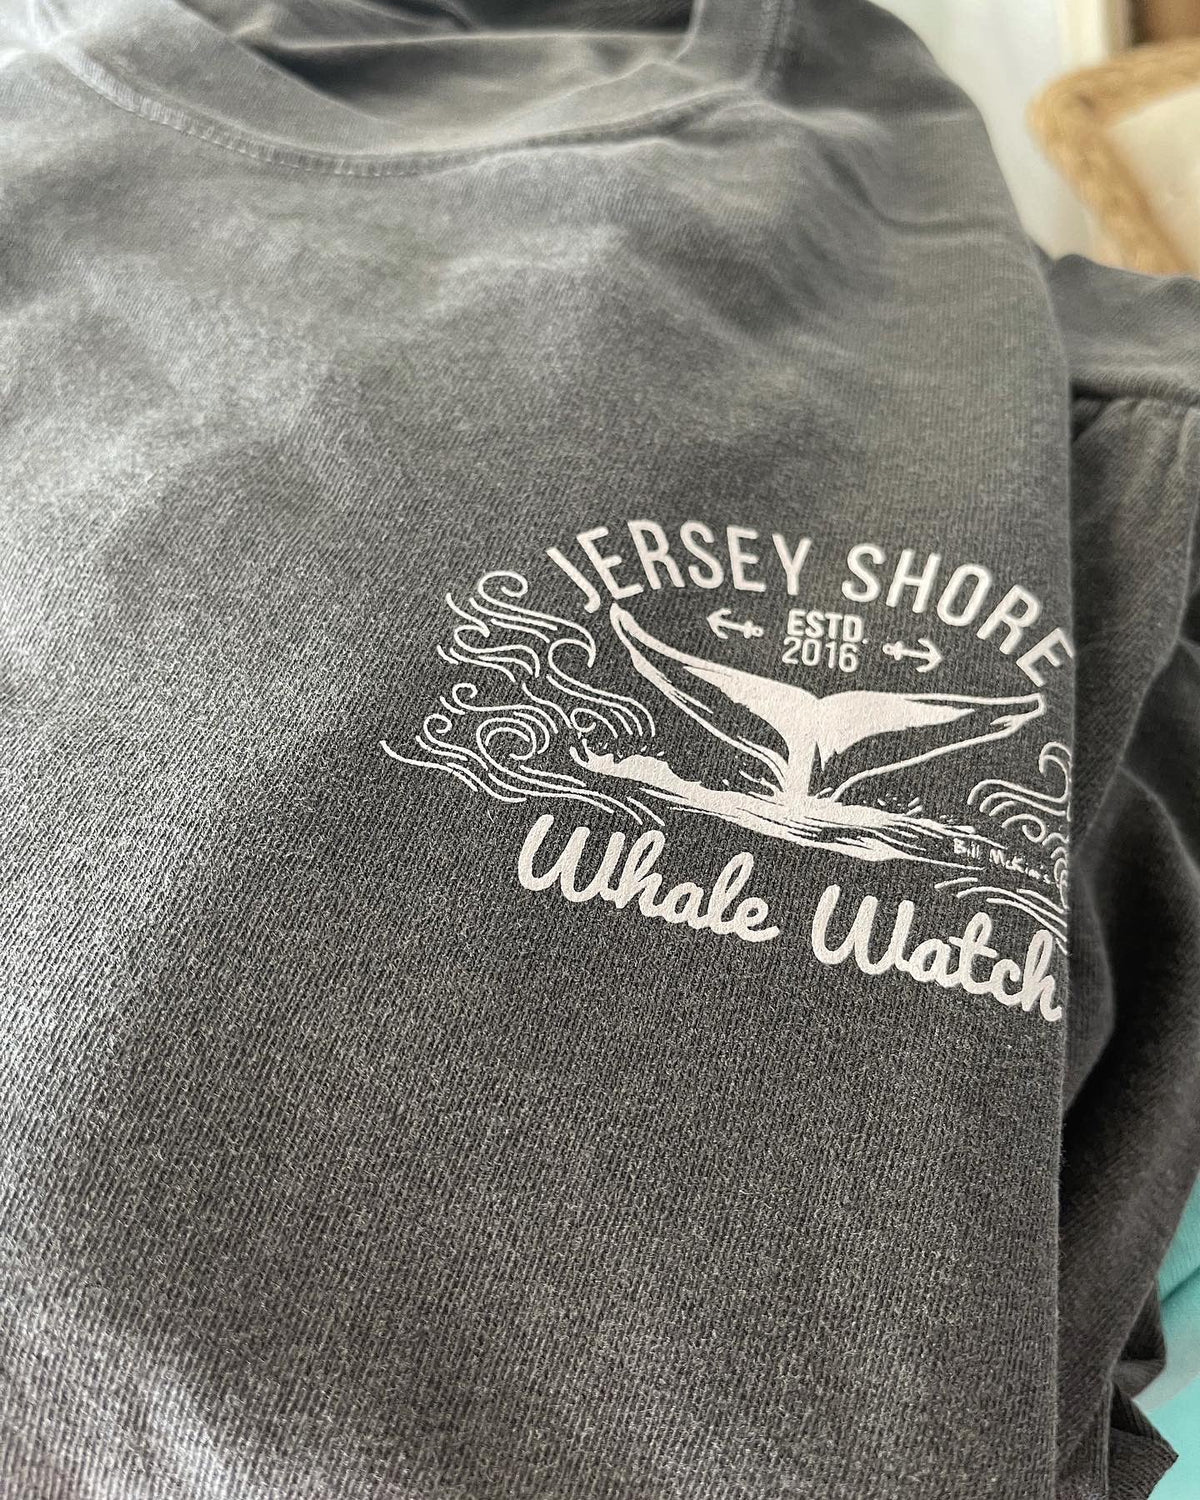 Youth sizes Mystery Packs Tshirt Short Sleeve Jersey Shore whale watch shirts Bill McKim Photography -Jersey Shore whale watch tours 